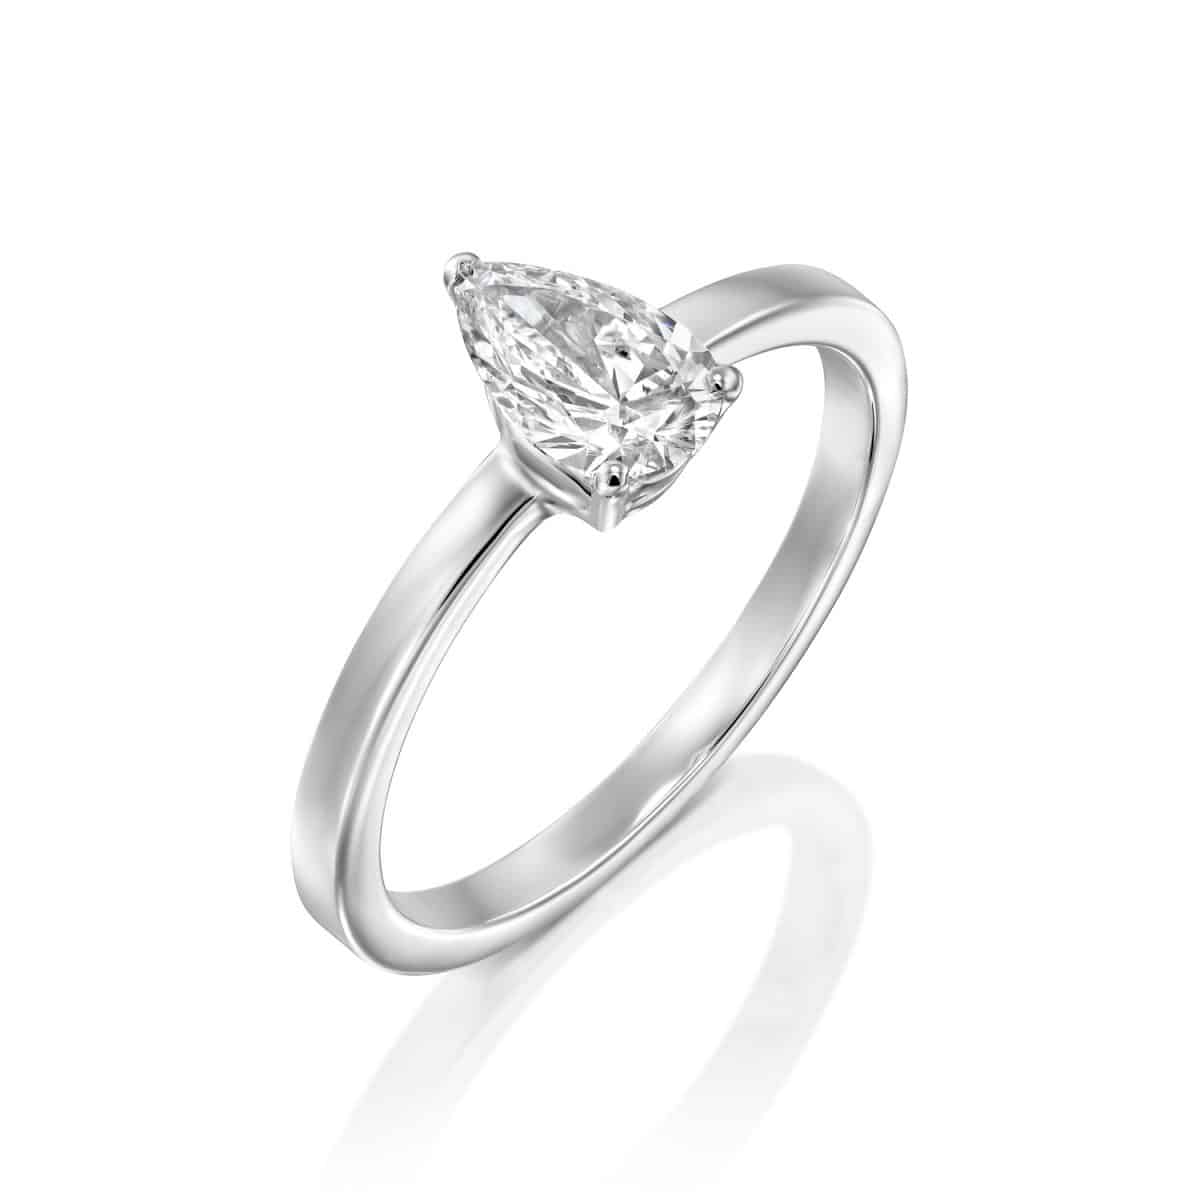 Brittney - White Gold Lab Grown Diamond Engagement Ring 0.60ct. - main